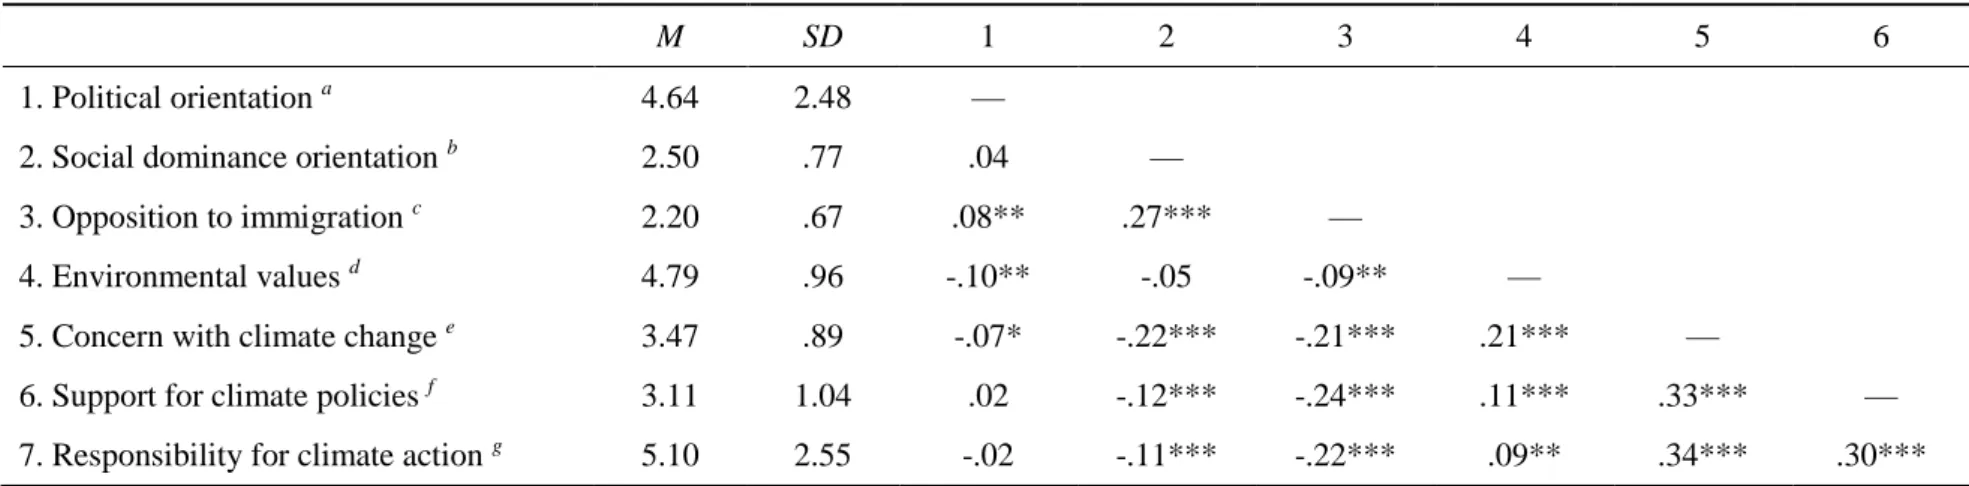 Table 1. Descriptive statistics and correlations among measures in a representative random sample of the Portuguese population